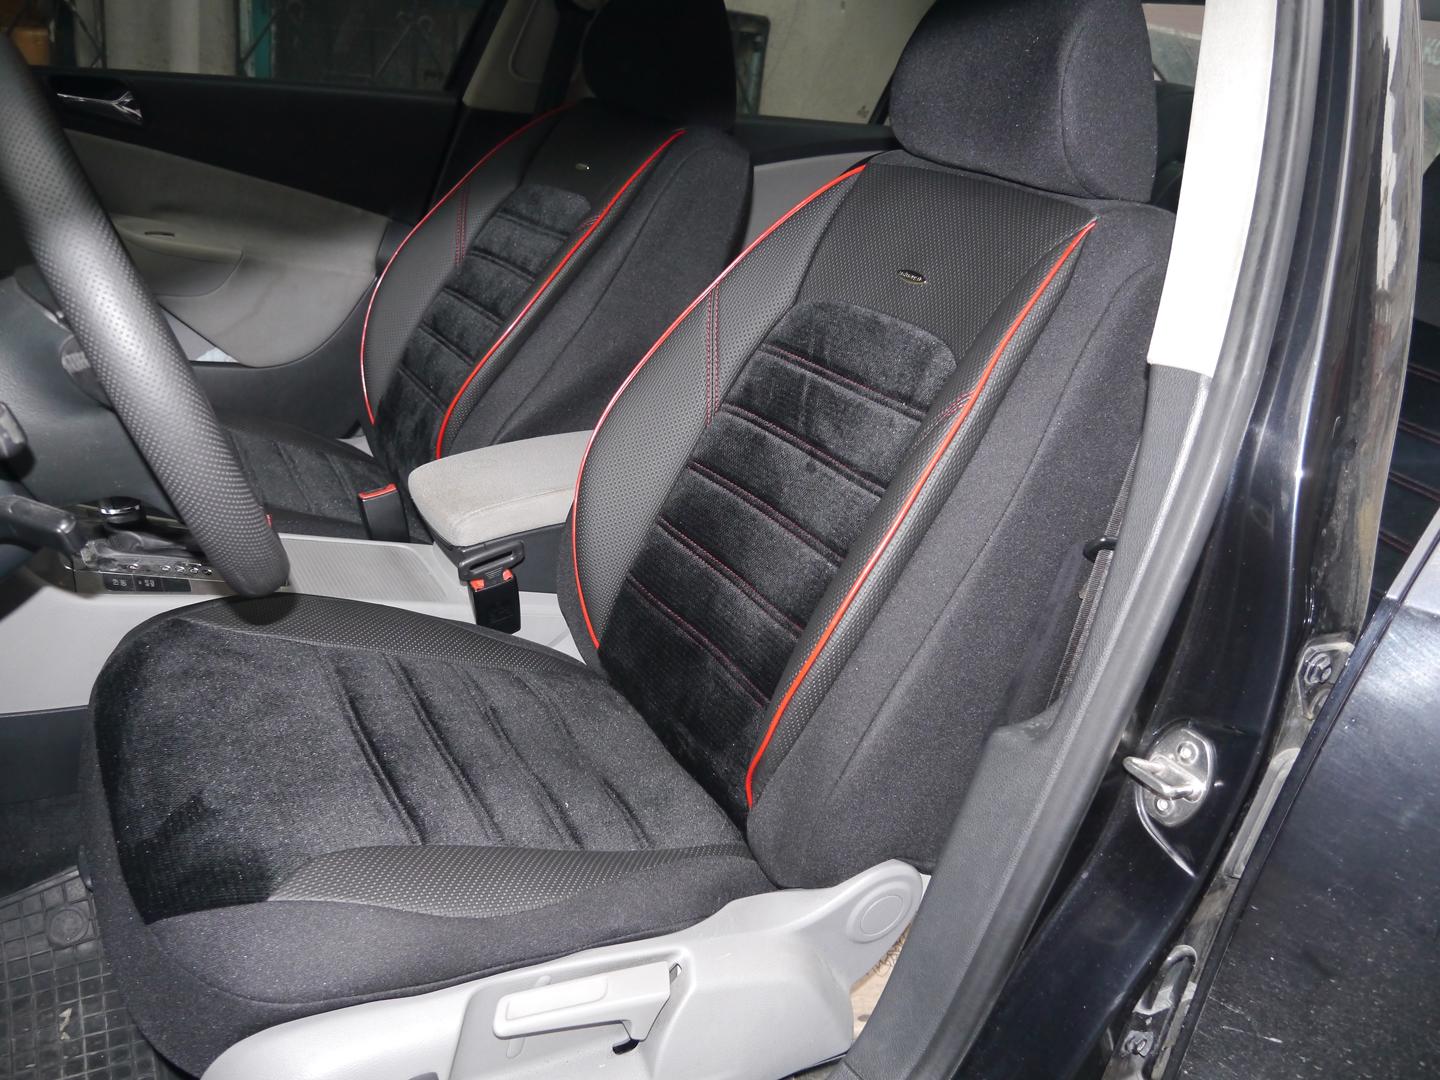 Sitzbezüge Sitzbezug Schonbezüge für VW Polo X-line Grau